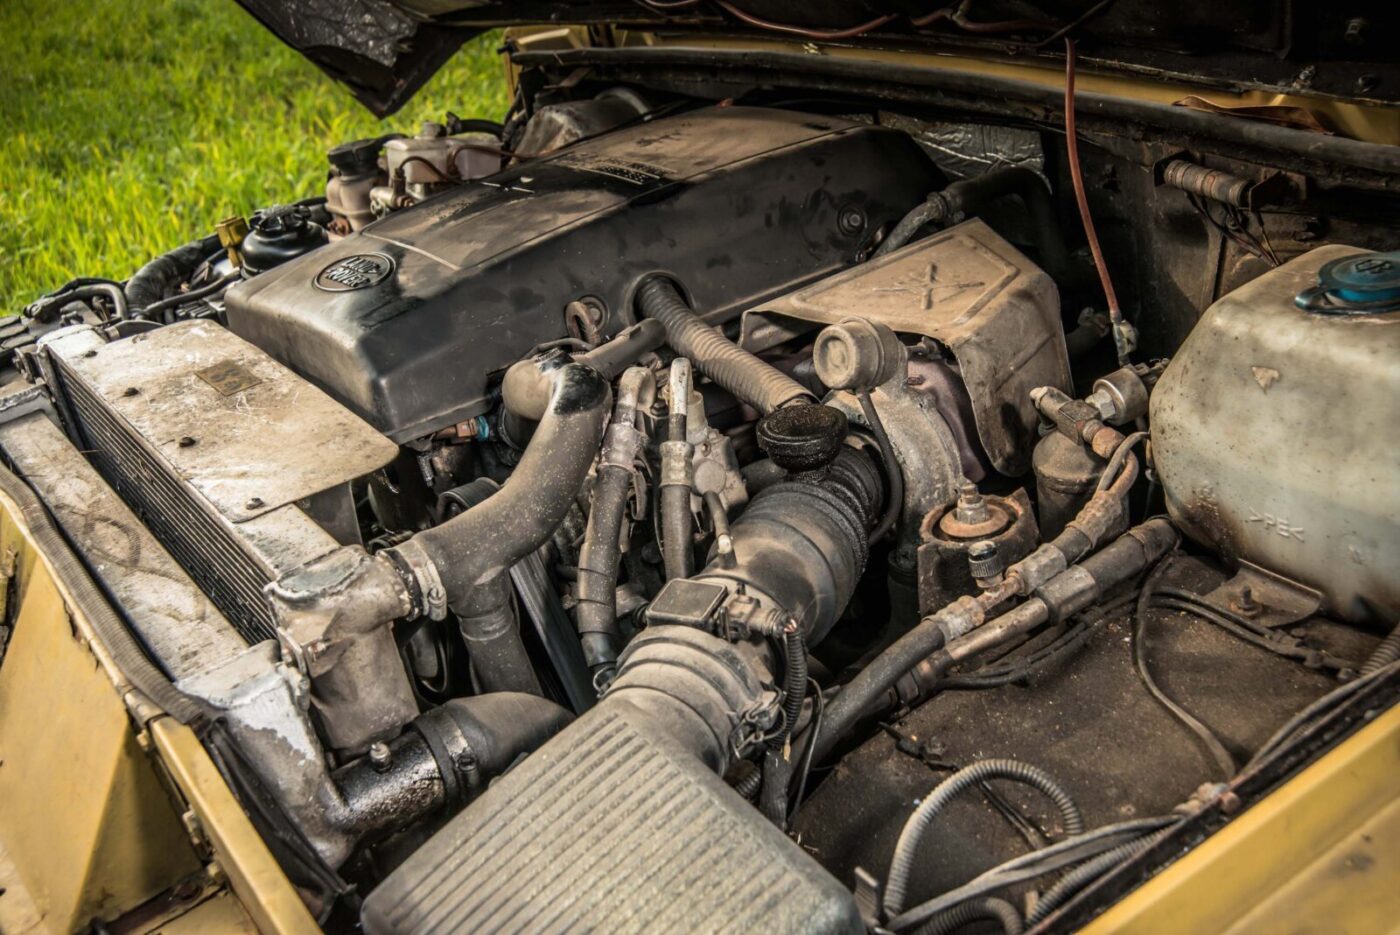 Range Rover engine